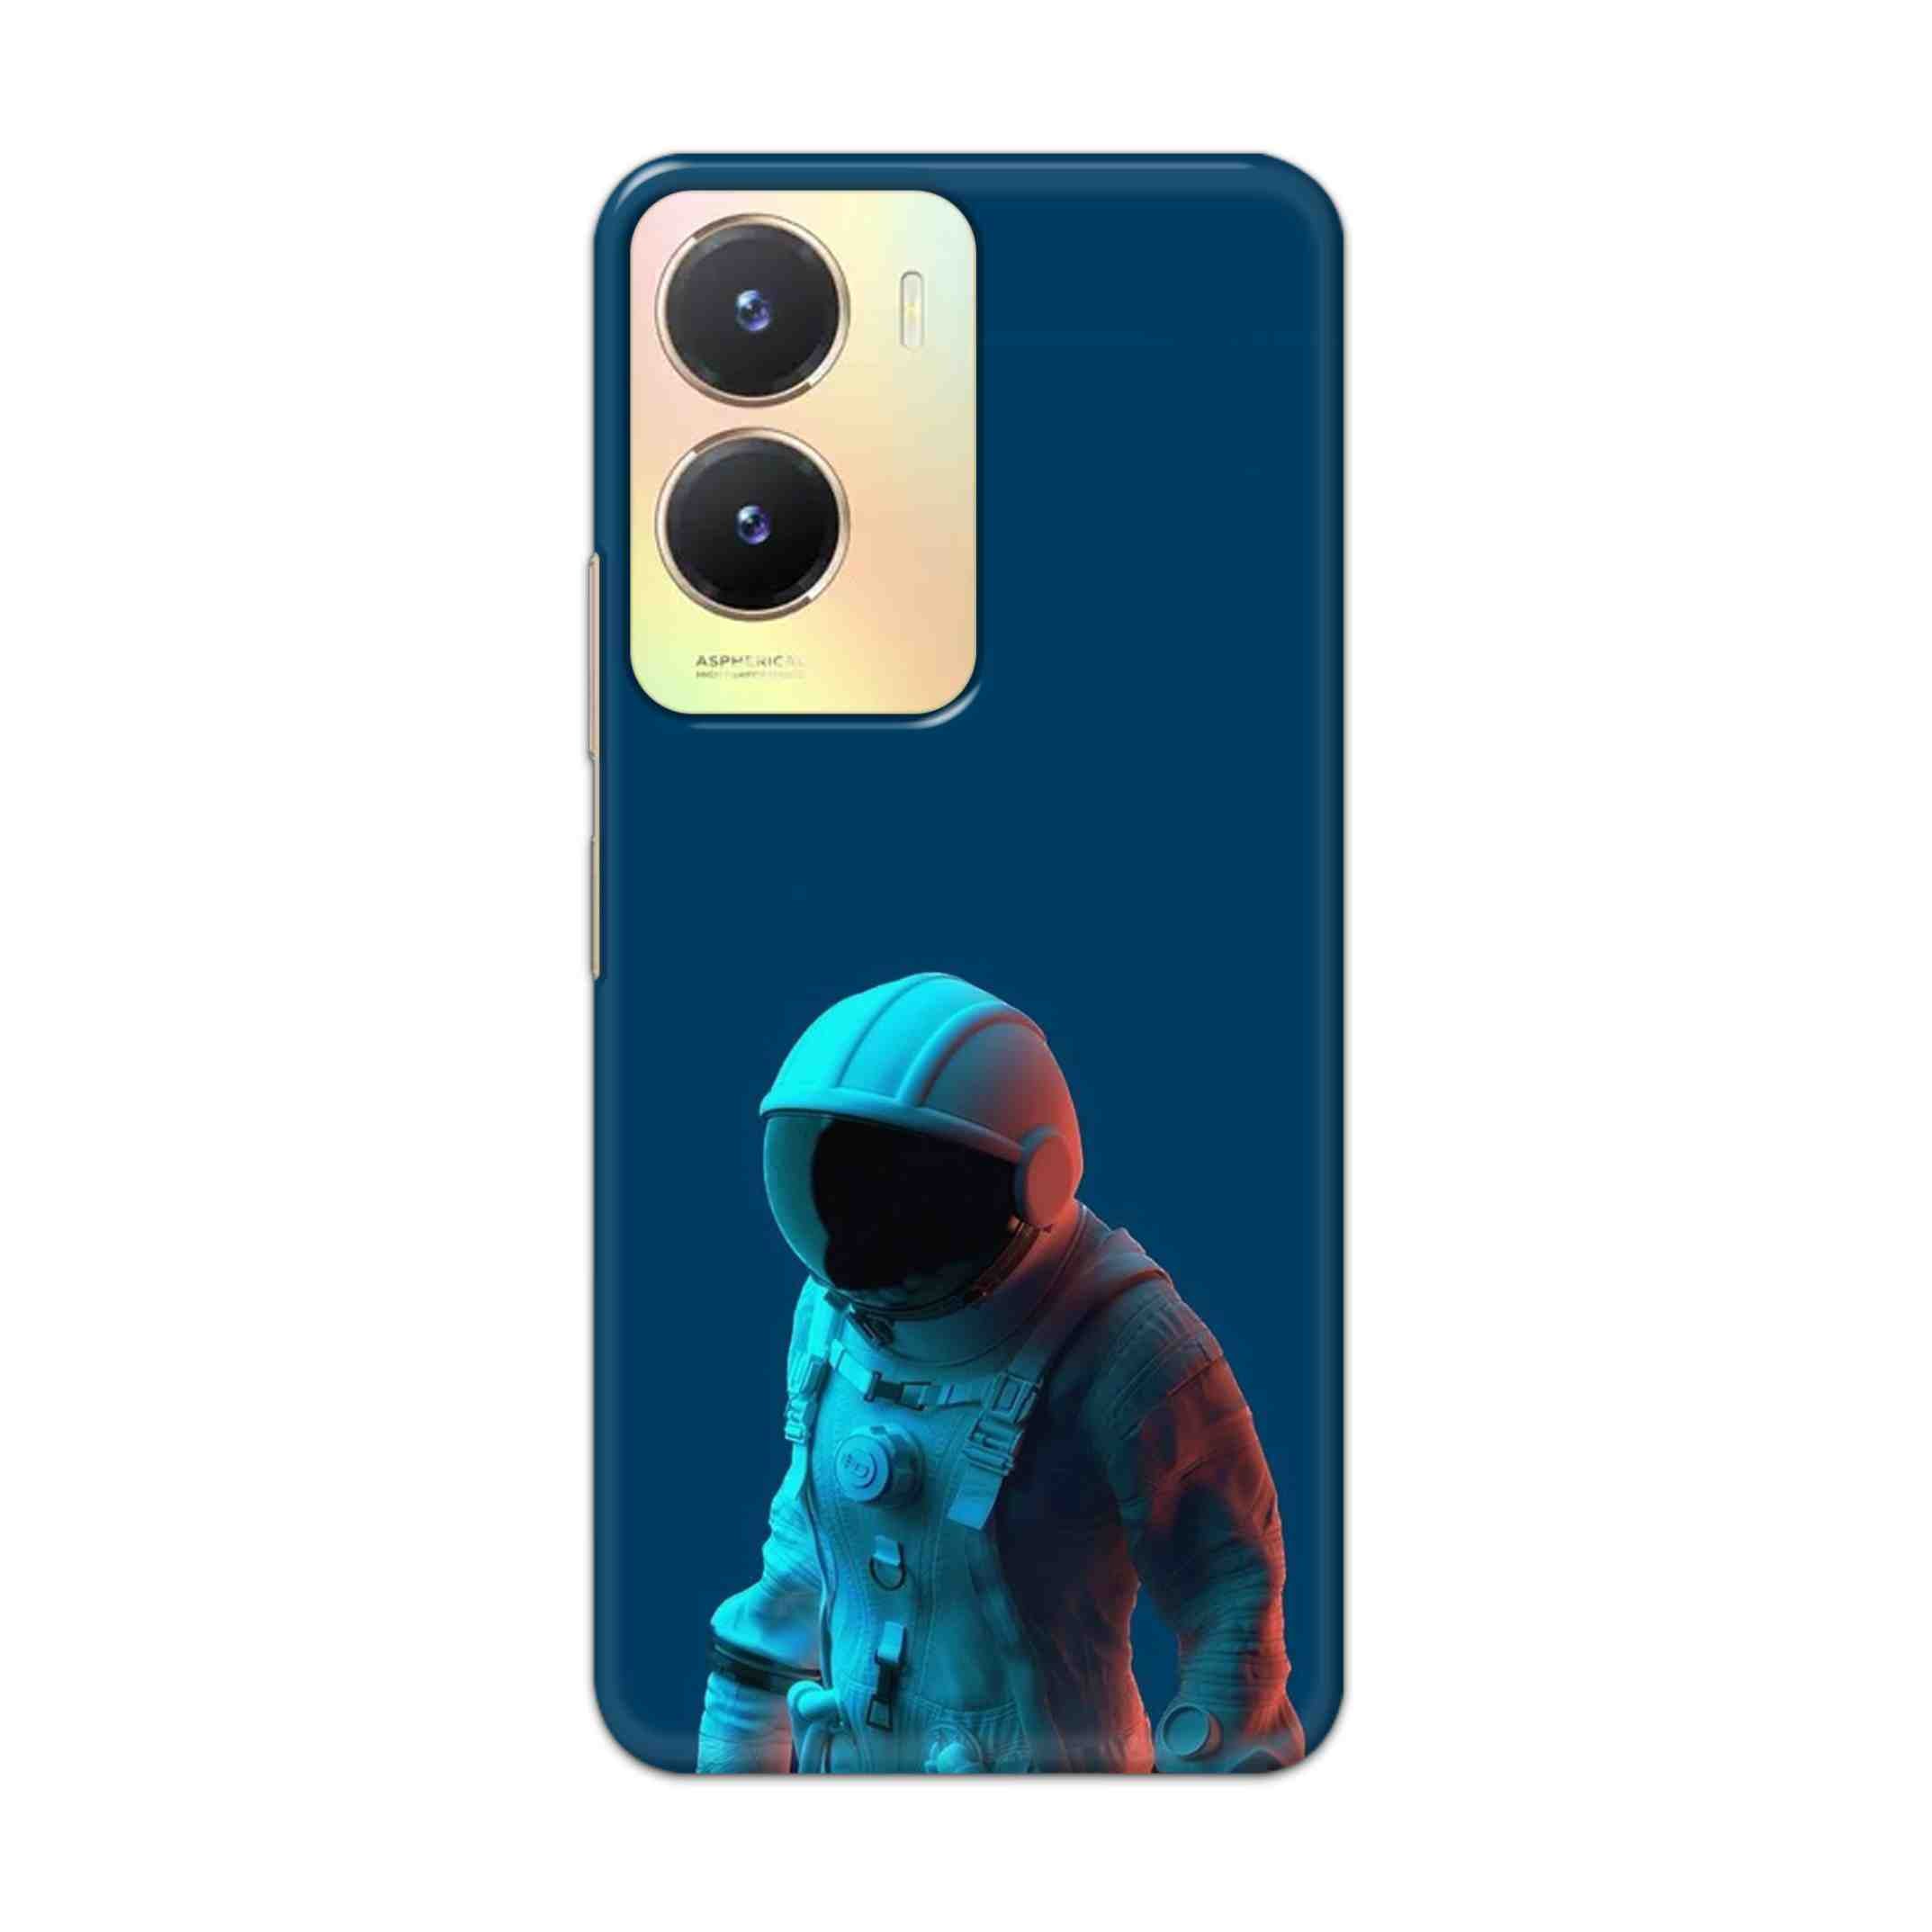 Buy Blue Astronaut Hard Back Mobile Phone Case Cover For Vivo T2x Online